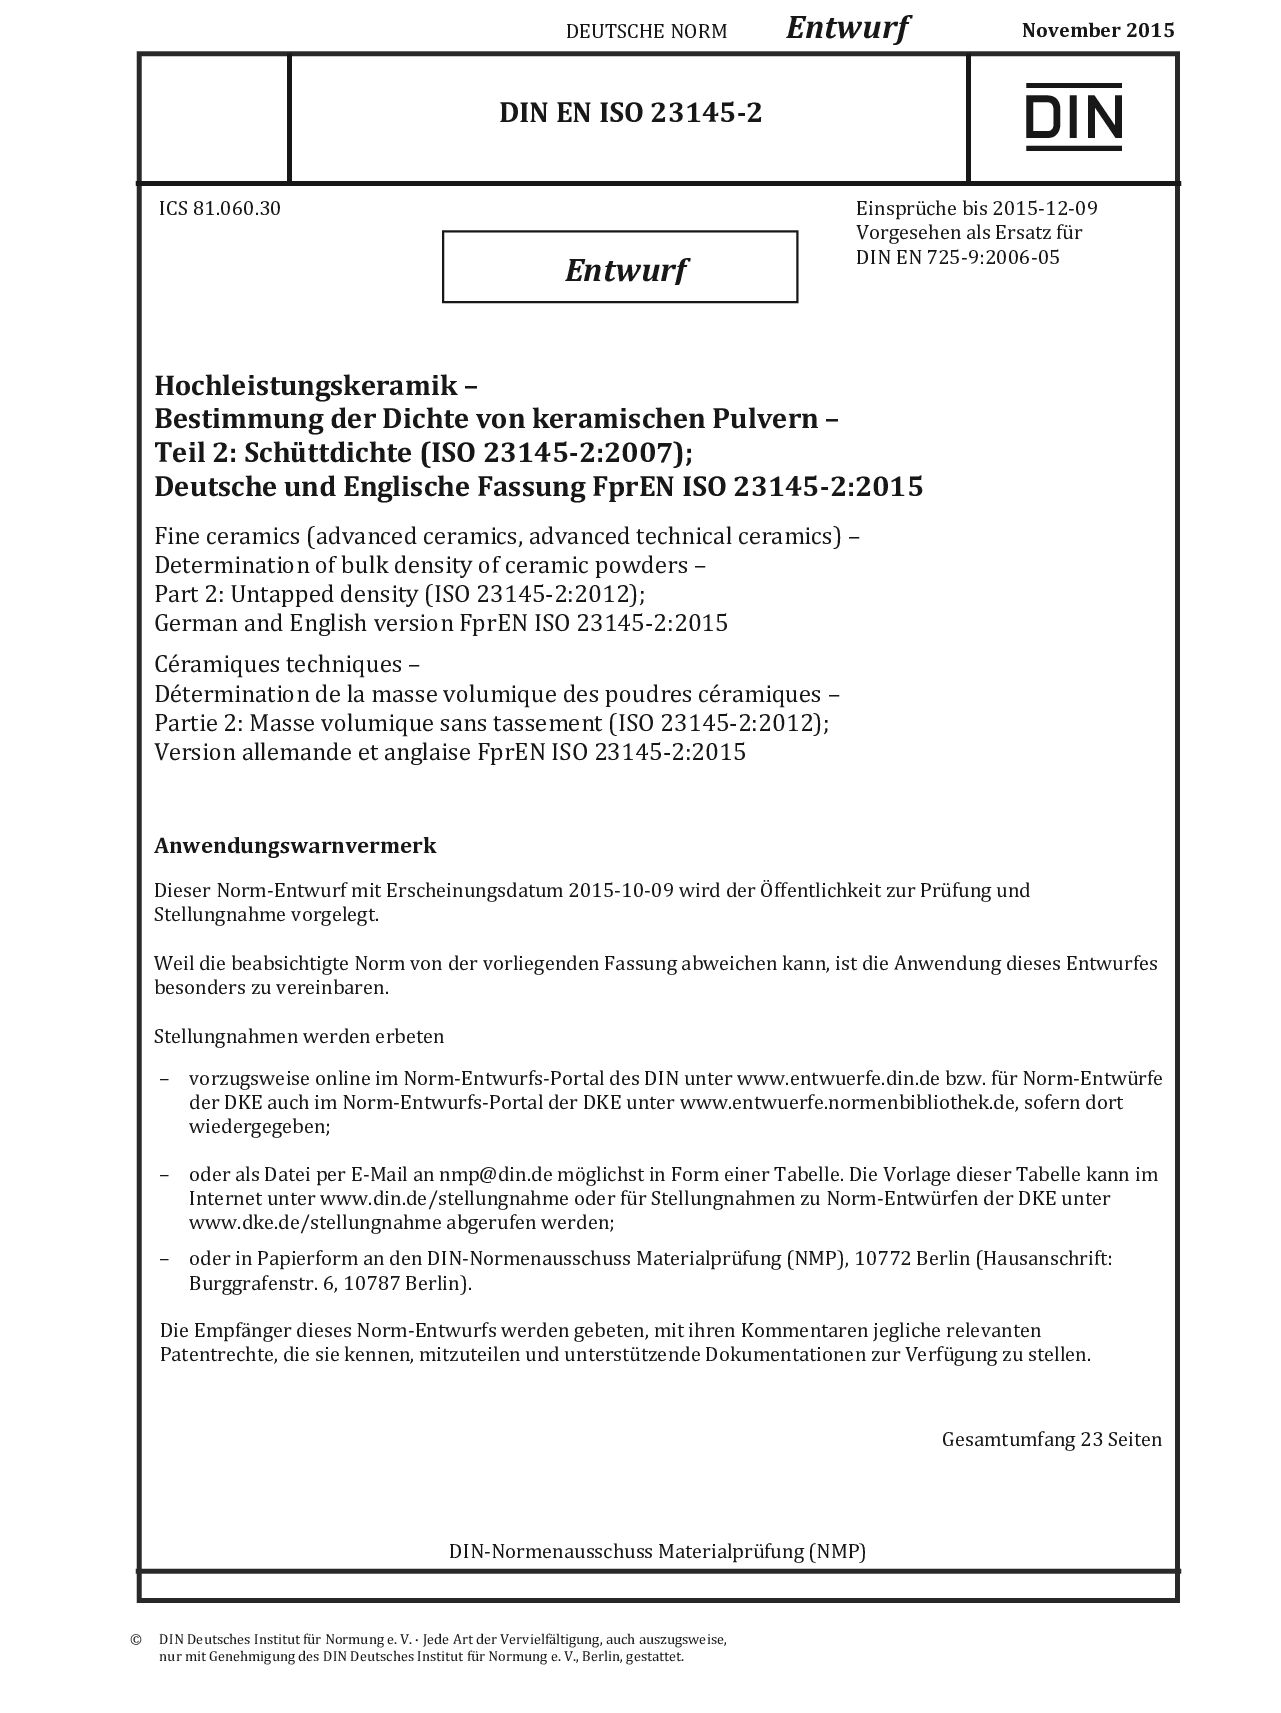 DIN EN ISO 23145-2 E:2015-11